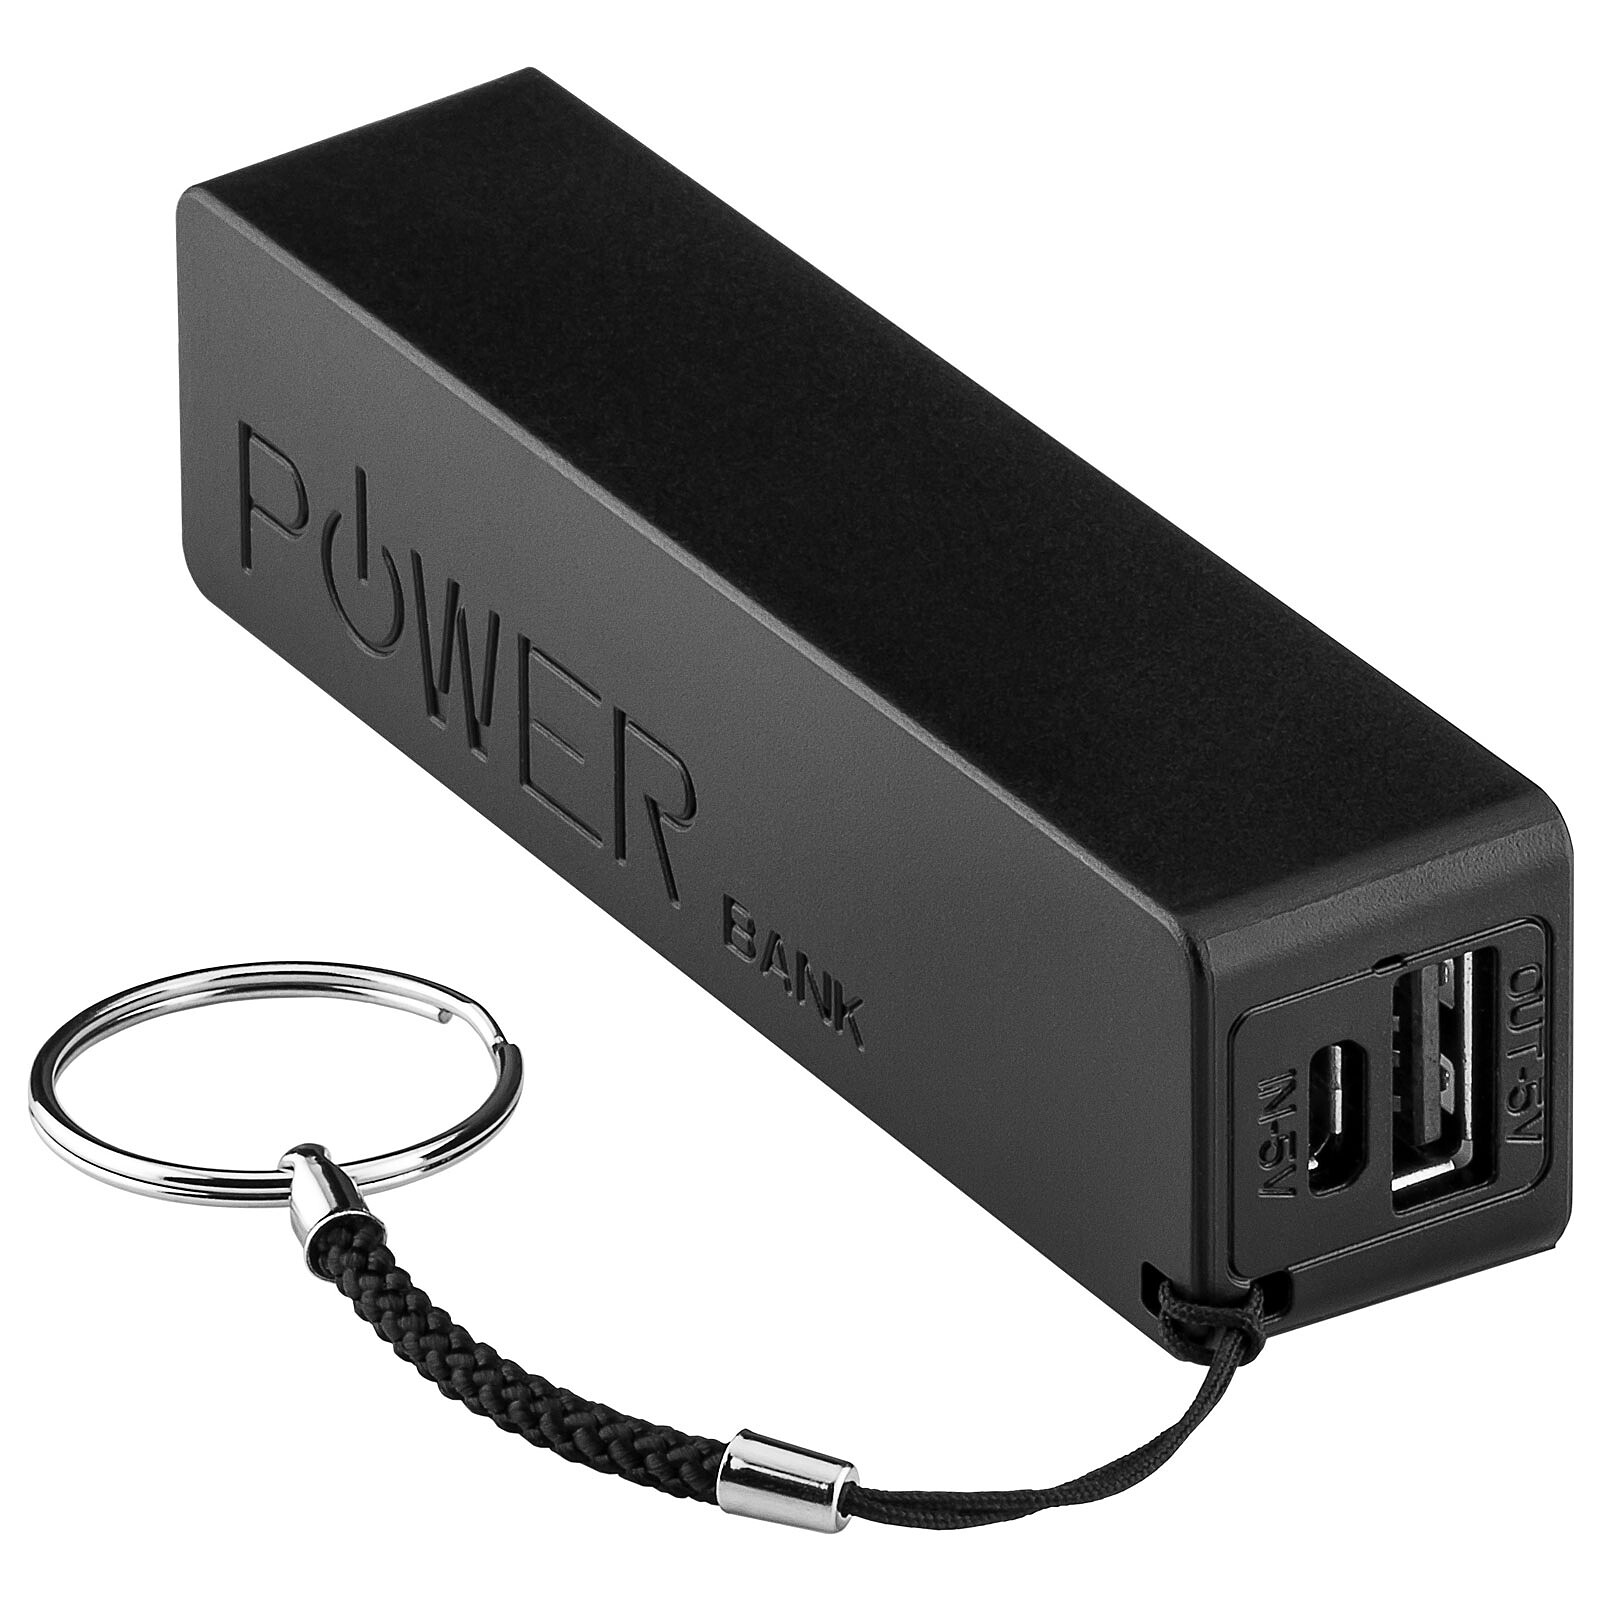 Goobay PocketPower 2.0 - Power bank - LDLC